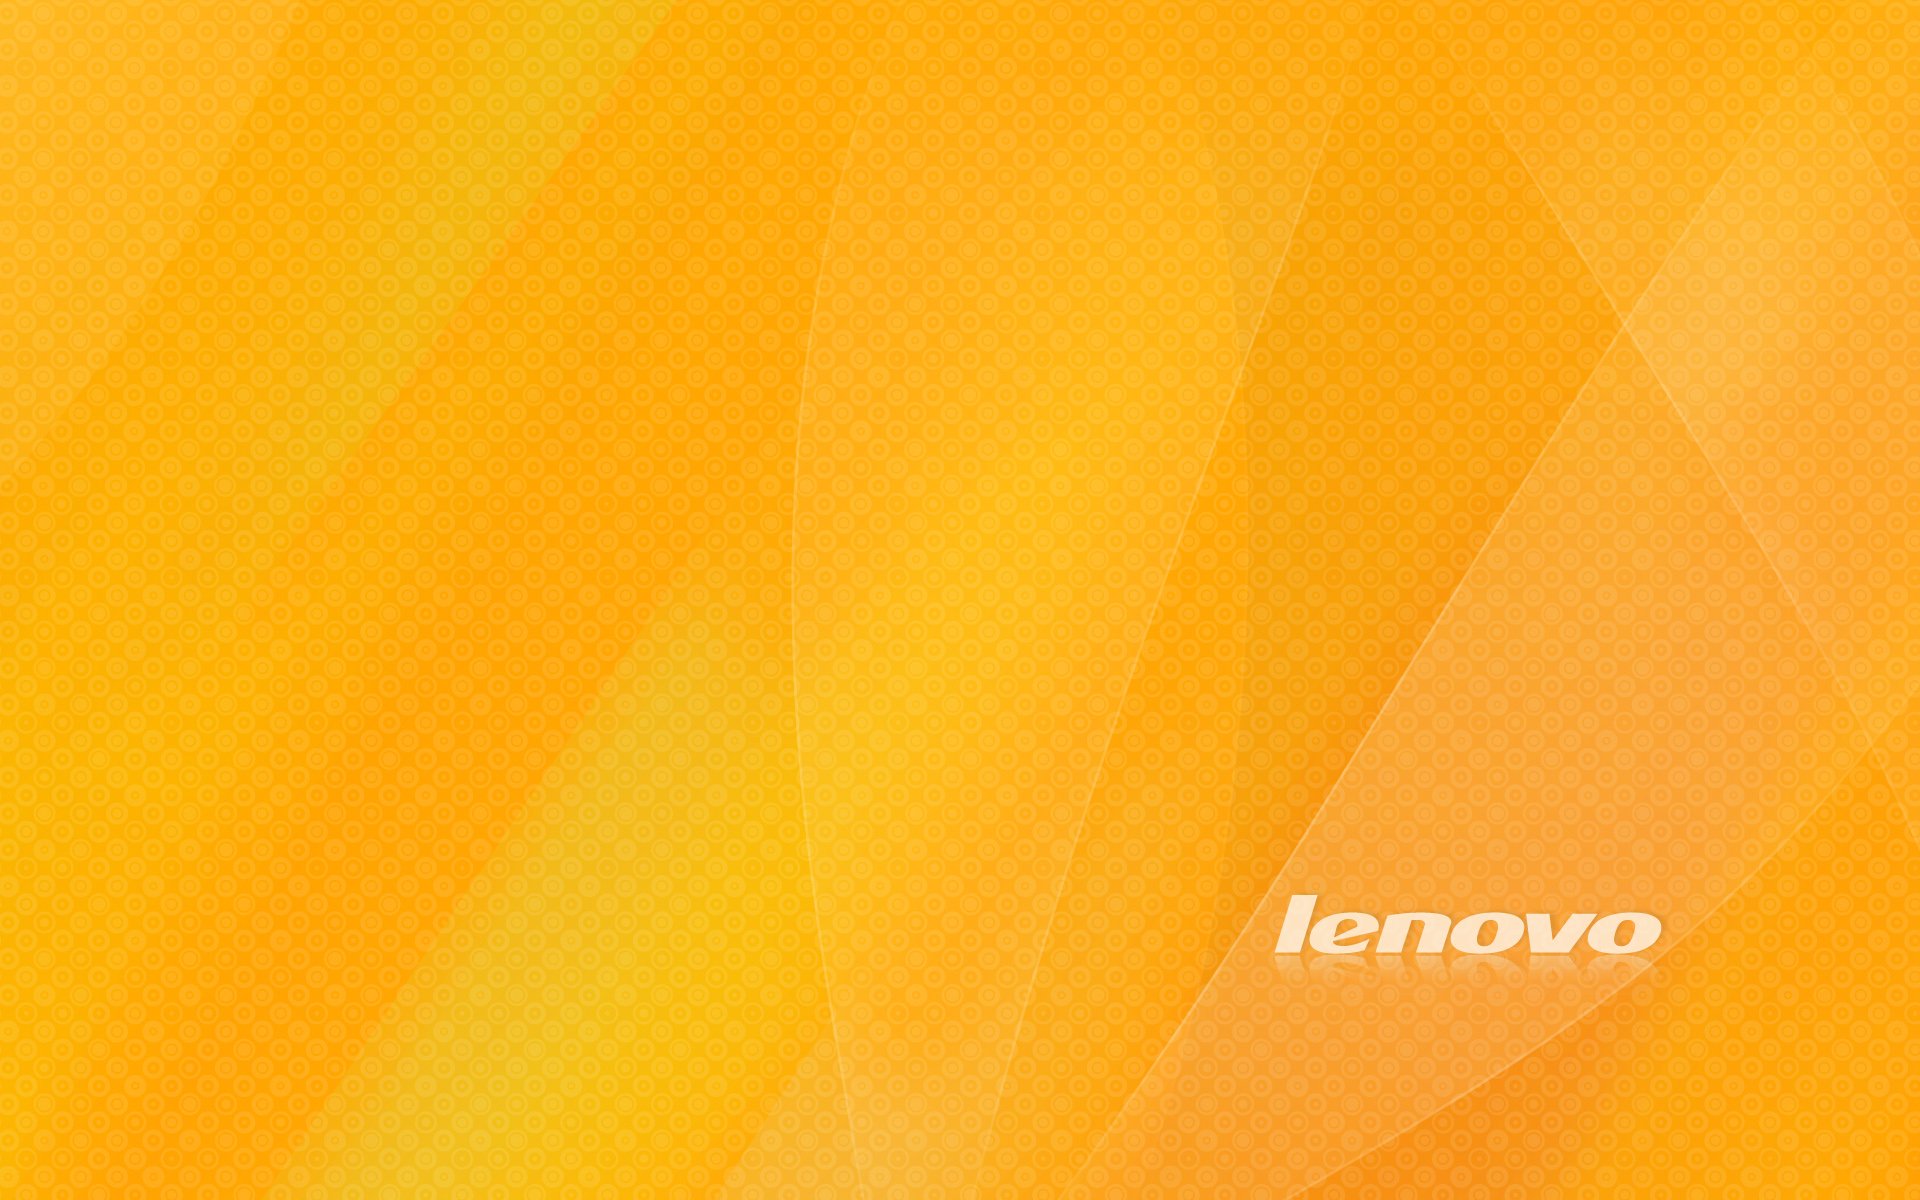 49+] Official Lenovo Wallpaper - WallpaperSafari